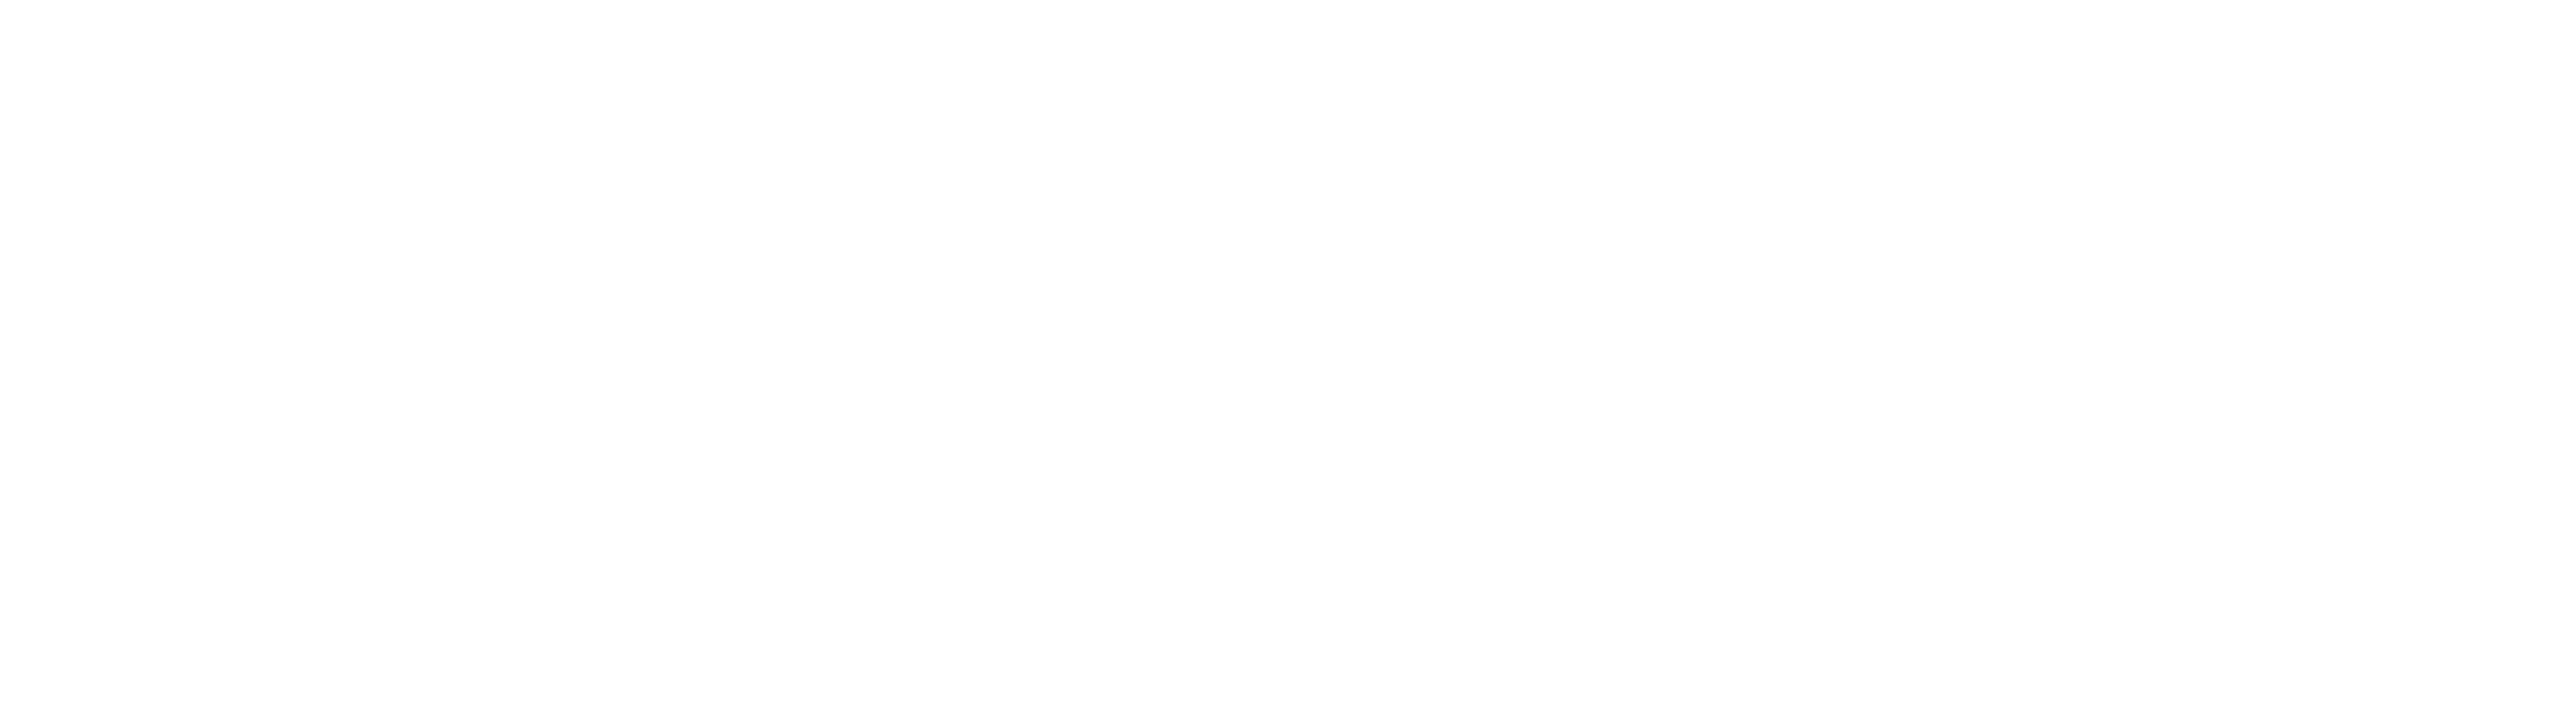 Логотип Московский спорт